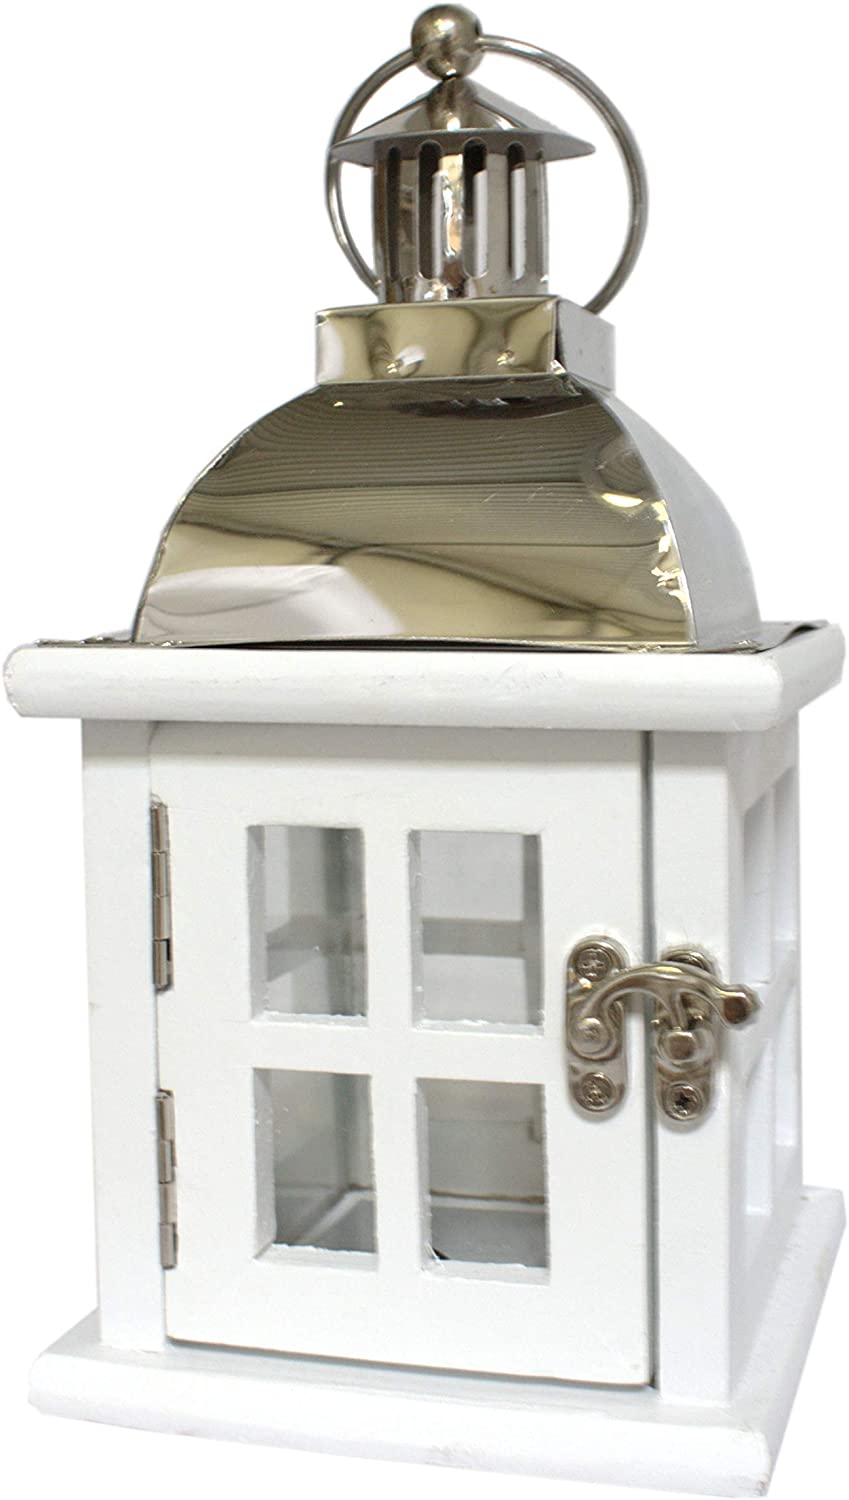 DARO DEKO Daro Decorative Wooden Lantern With Real Glass Panes White Silver 10.5 Cm X